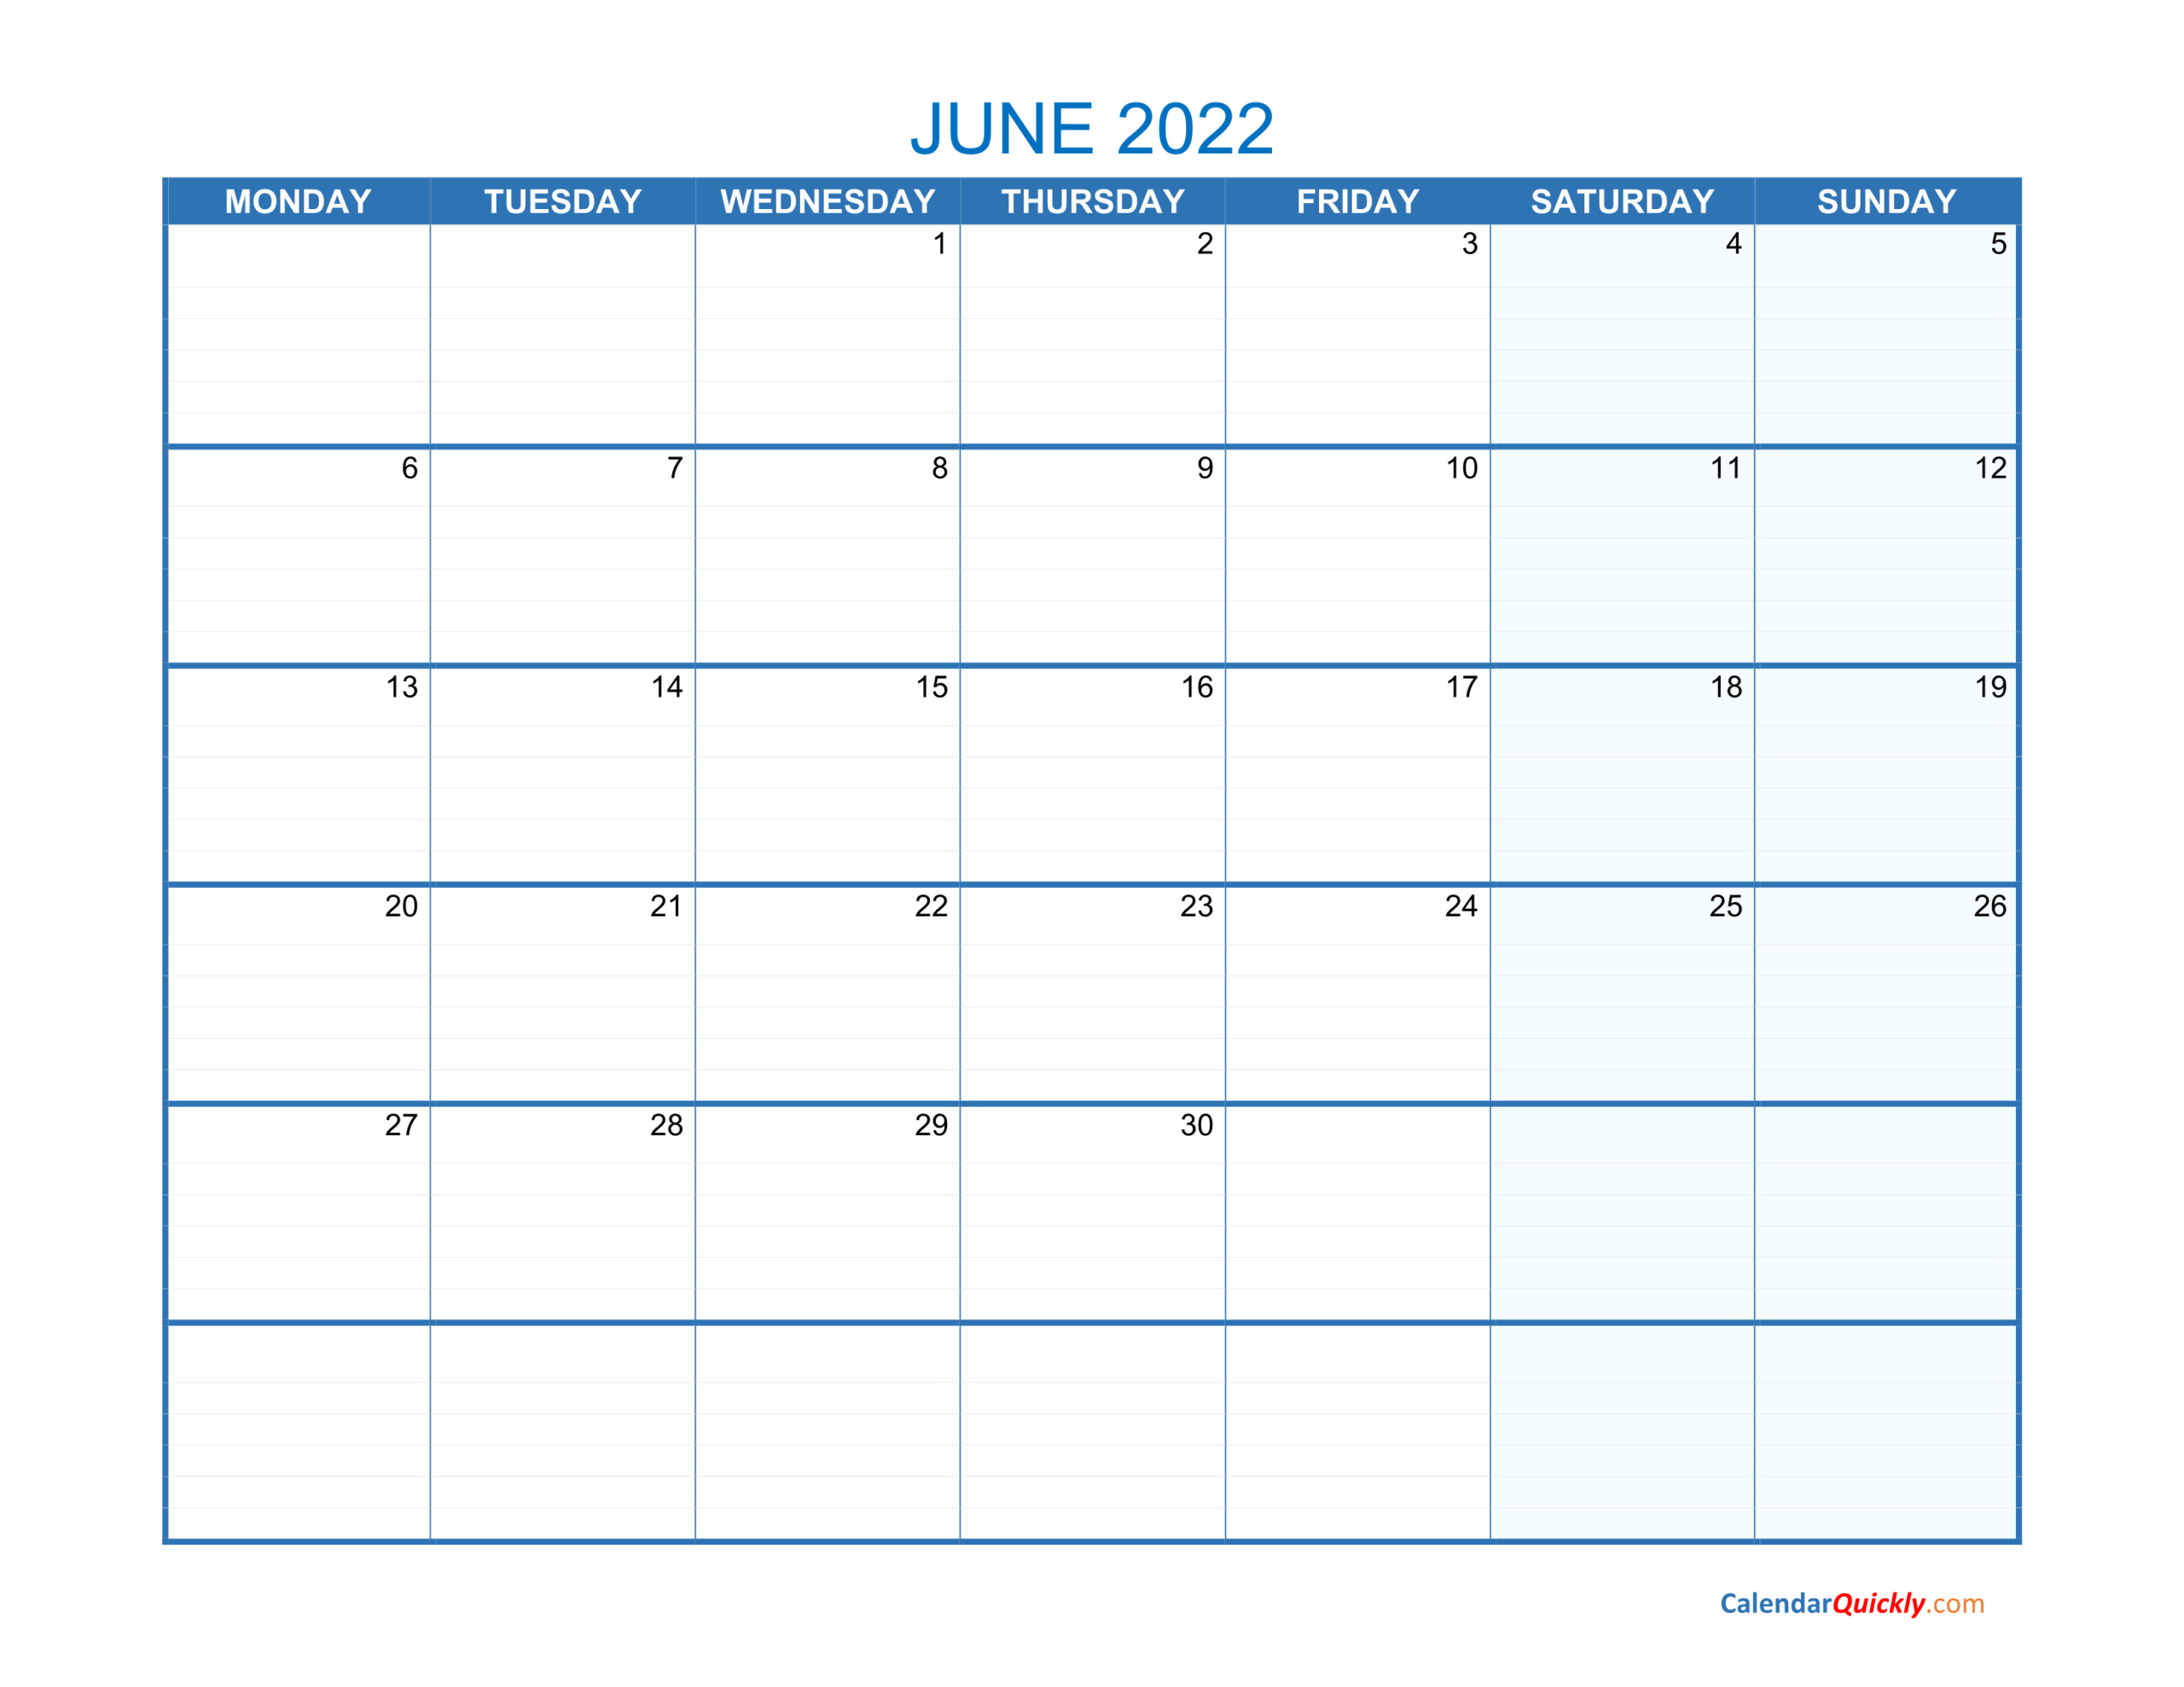 June Monday 2022 Blank Calendar | Calendar Quickly  Free Printable Calendar July 2022 To June 2022